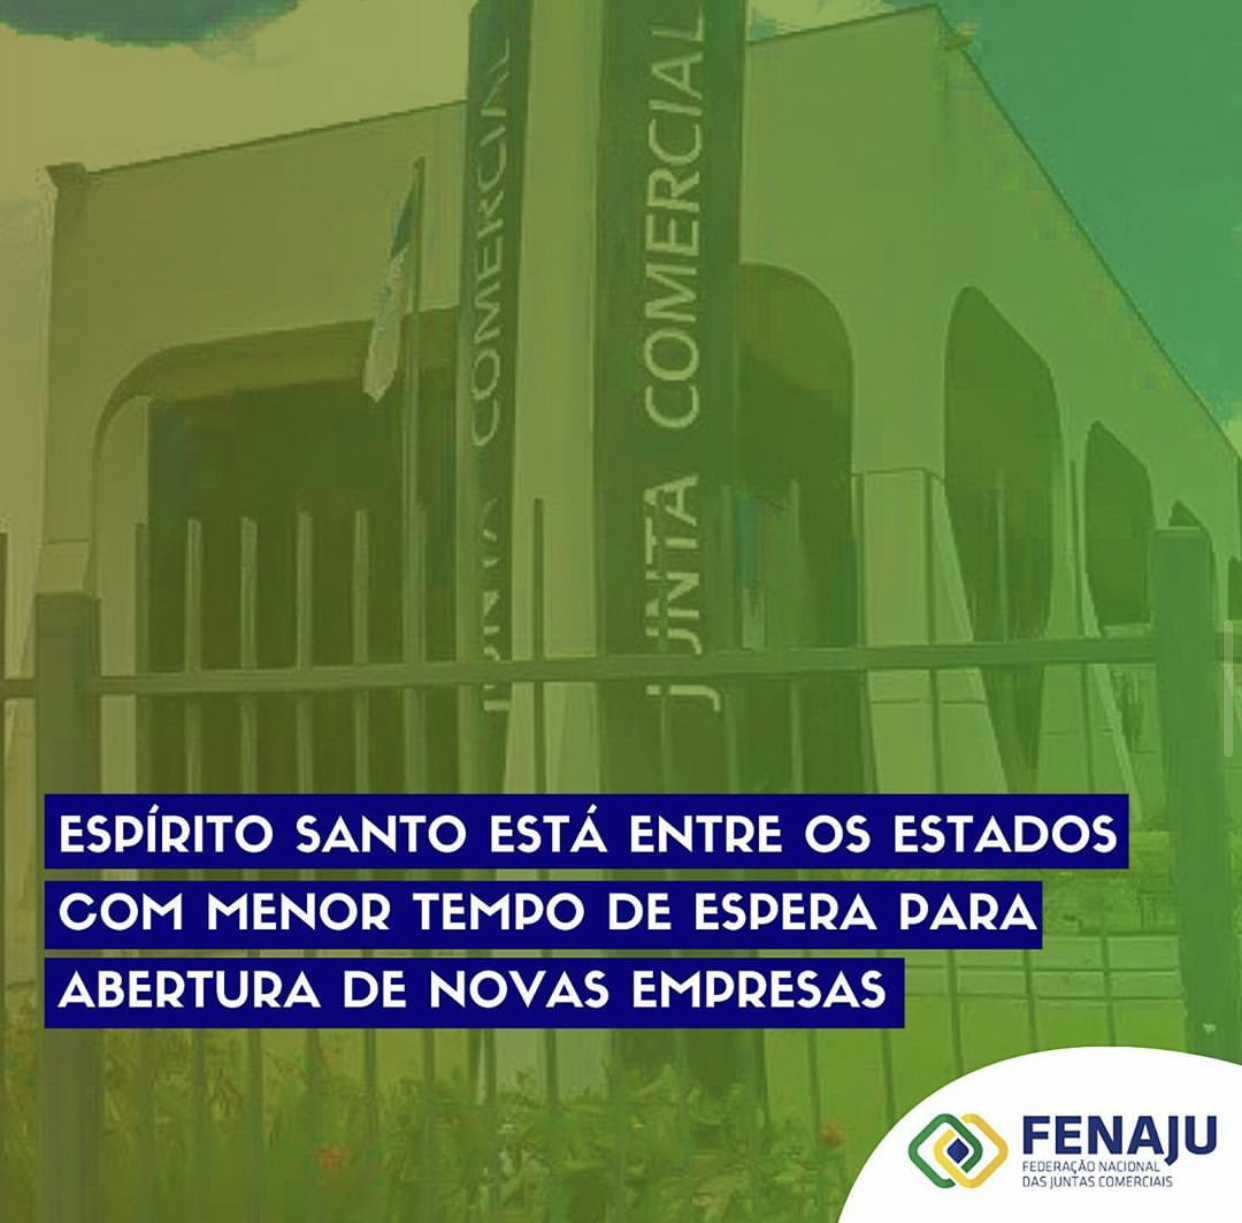 You are currently viewing Espírito Santo está entre os 12 estados com menor tempo de espera para abertura de novas empresas